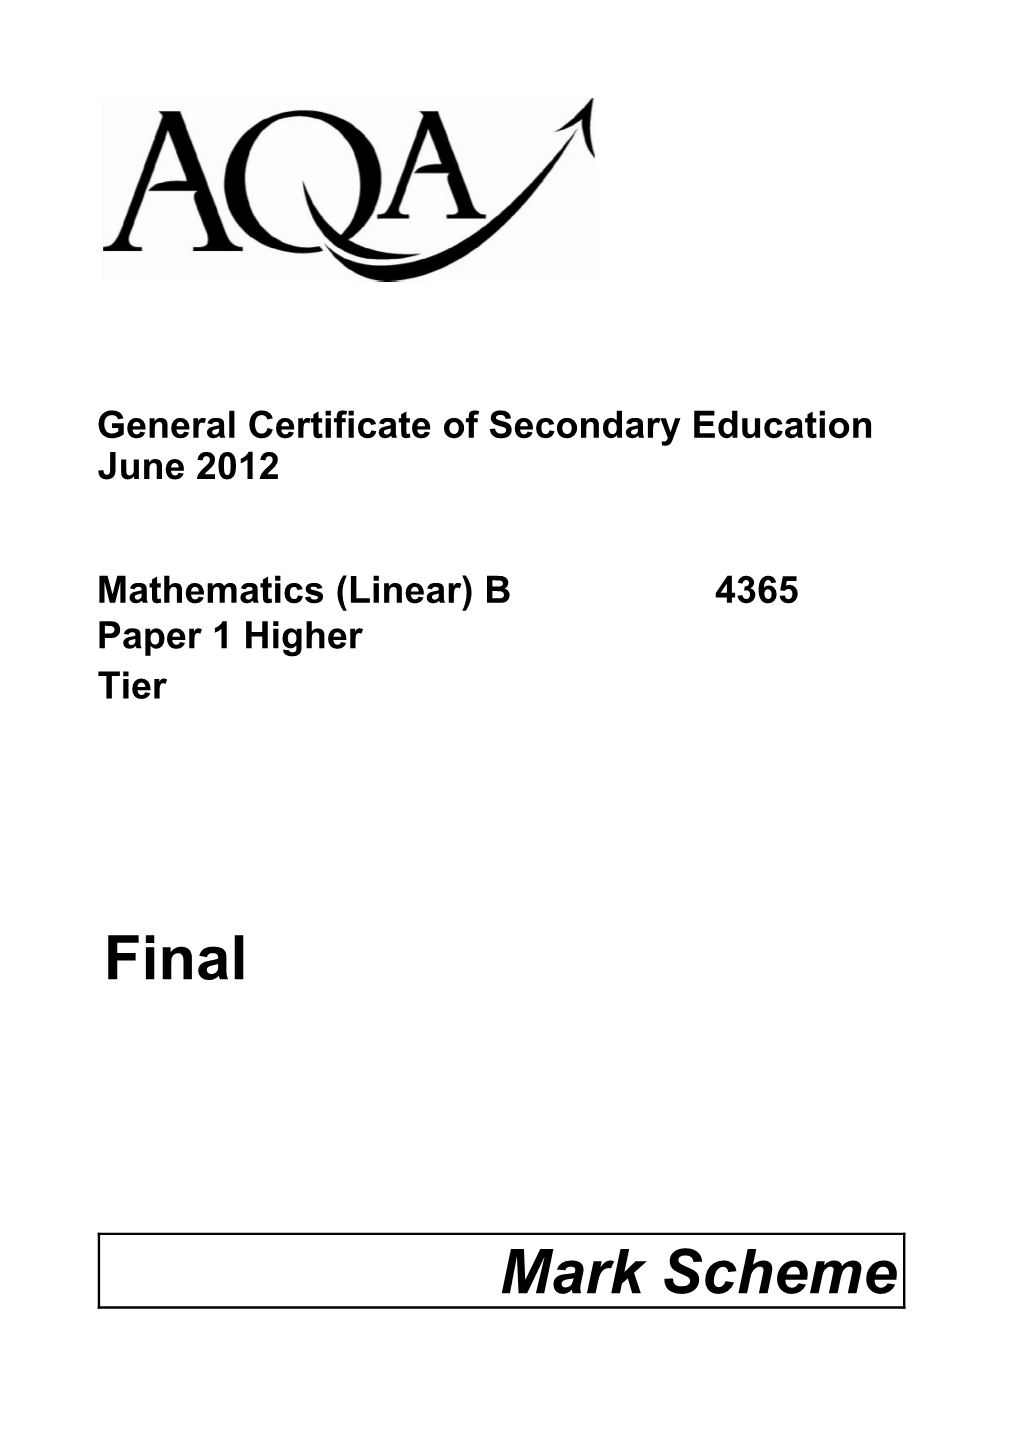 General Certificate of Secondary Education June 2012